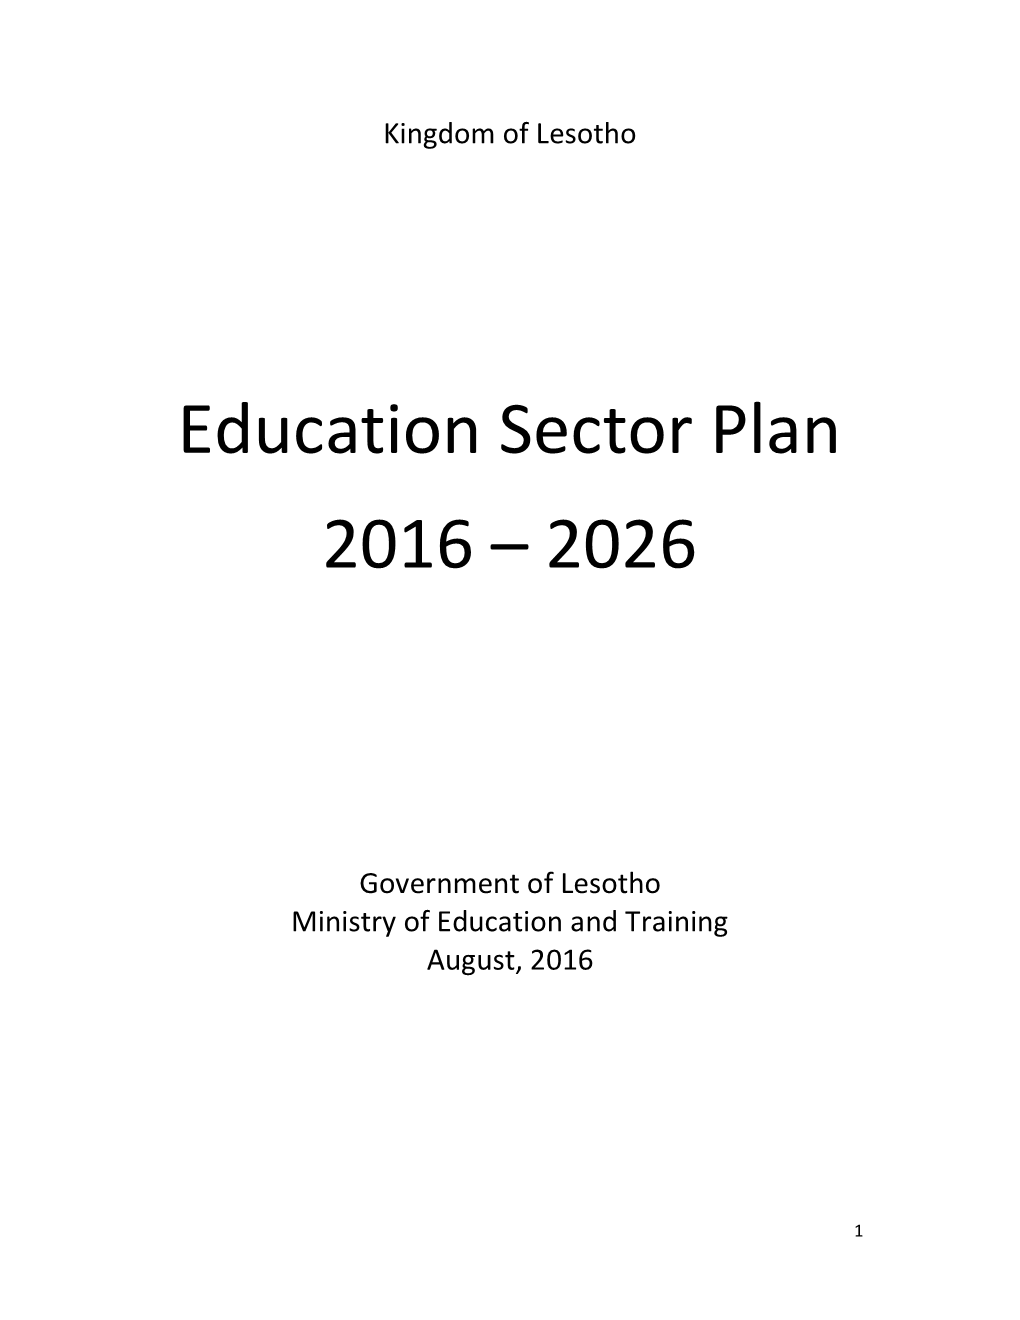 Education Sector Plan 2016-2026. Lesotho